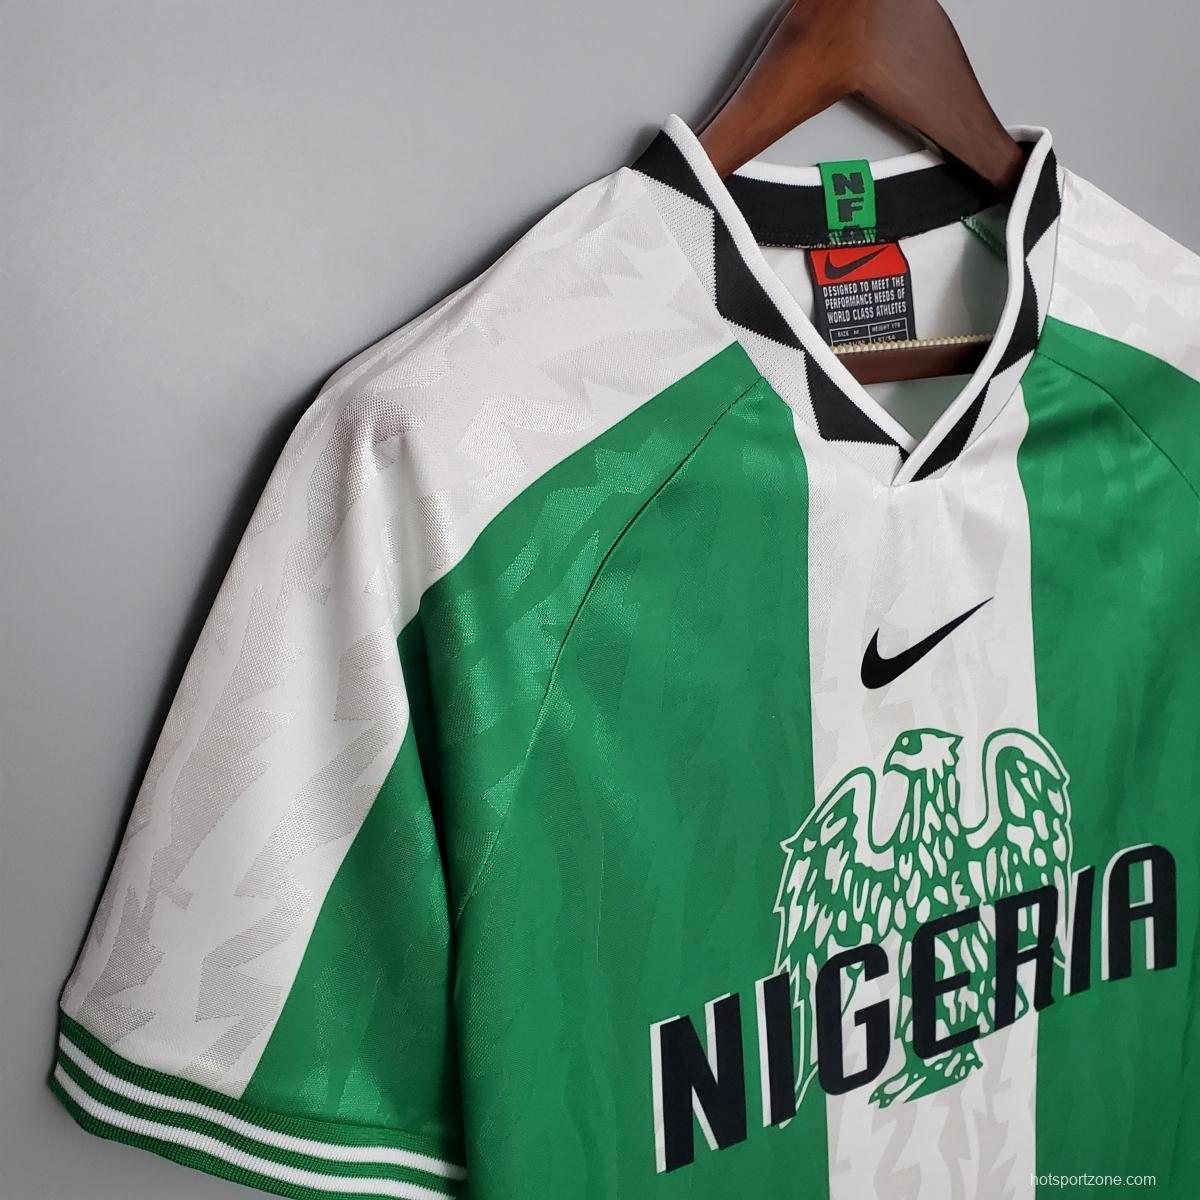 Retro Nigeria 1996 home Soccer Jersey